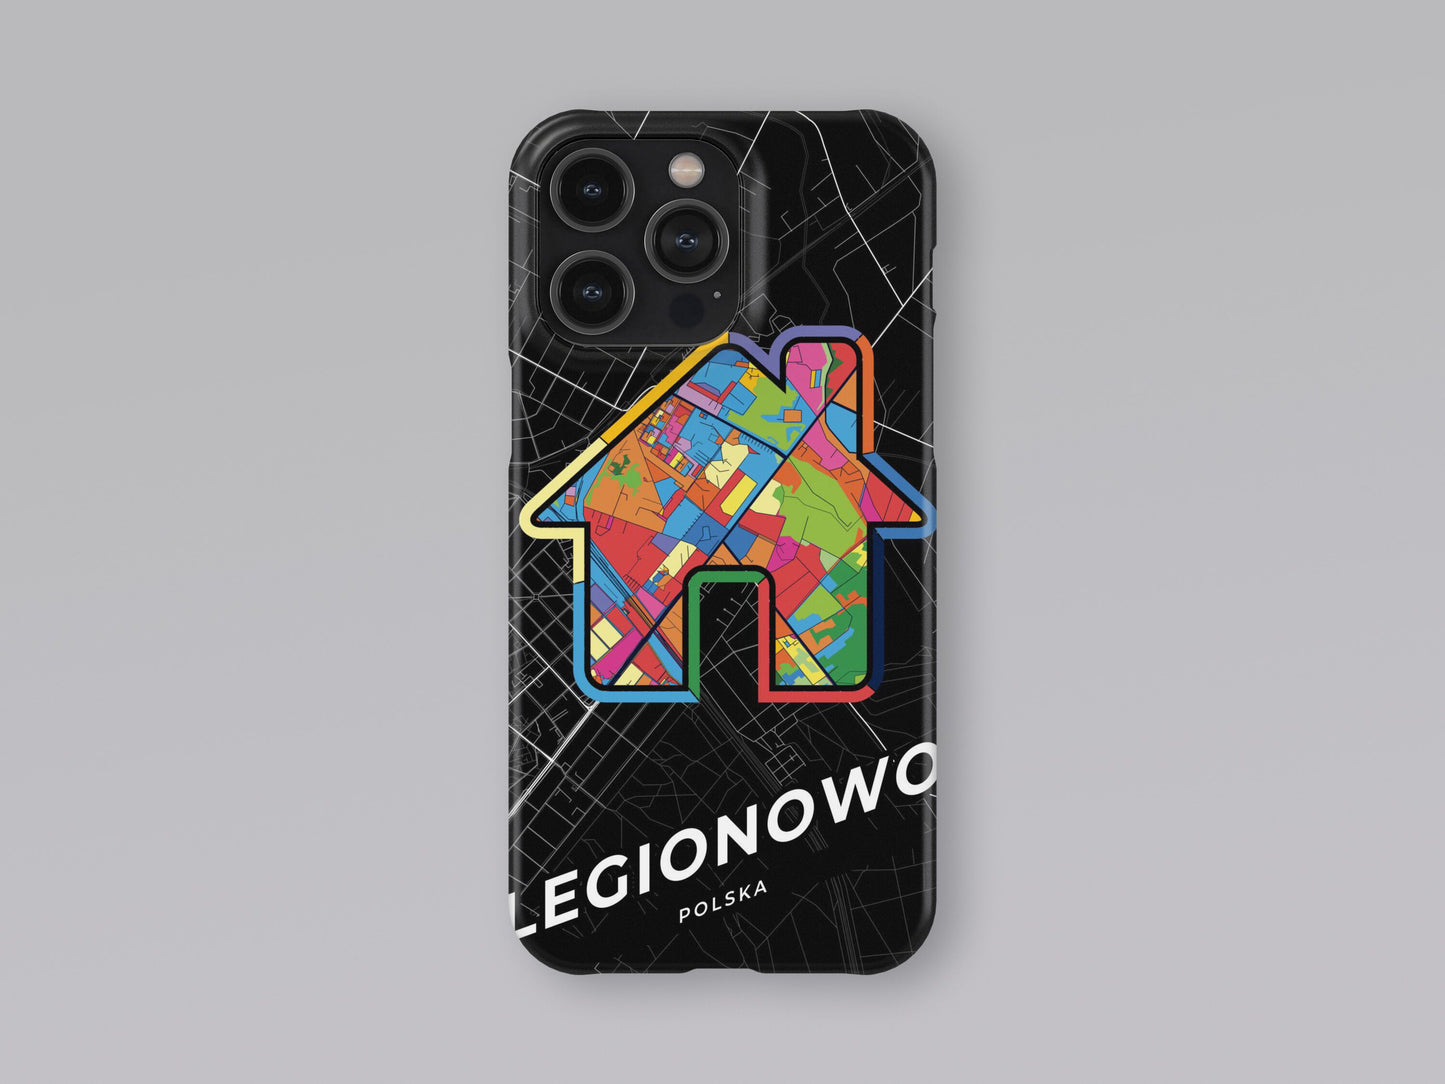 Legionowo Poland slim phone case with colorful icon. Birthday, wedding or housewarming gift. Couple match cases. 3